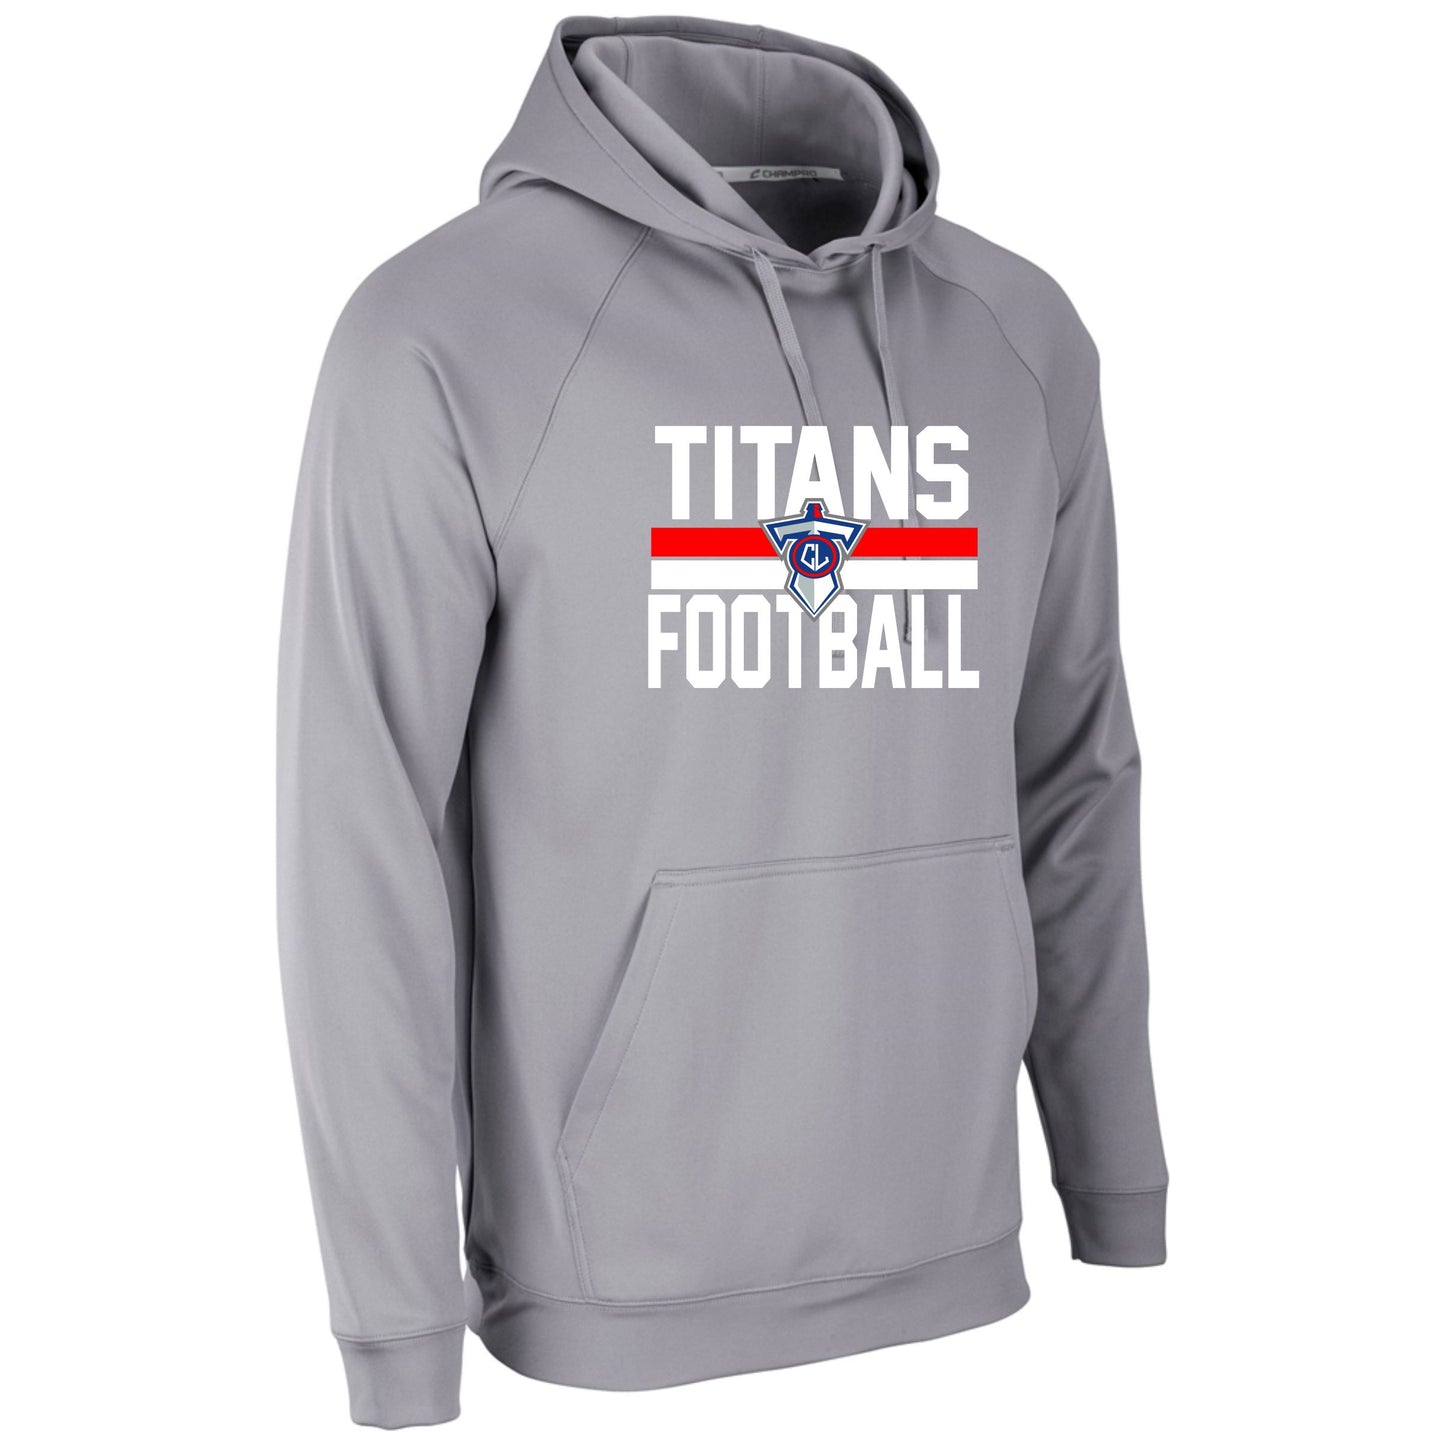 Titans Football Sword - Outerwear